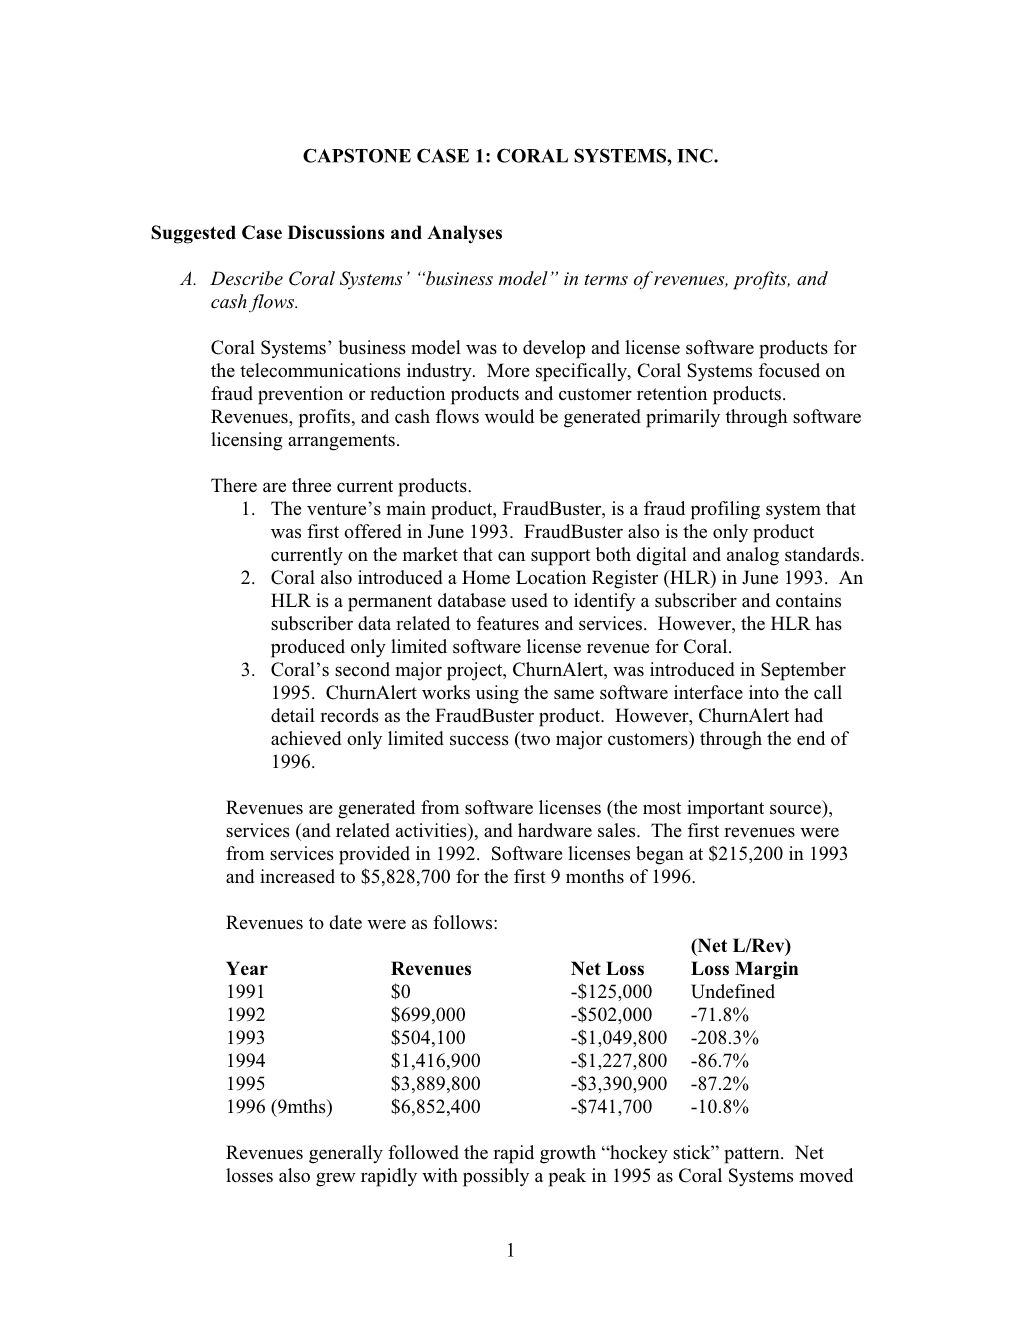 Capstone Case 1: Coral Systems, Inc